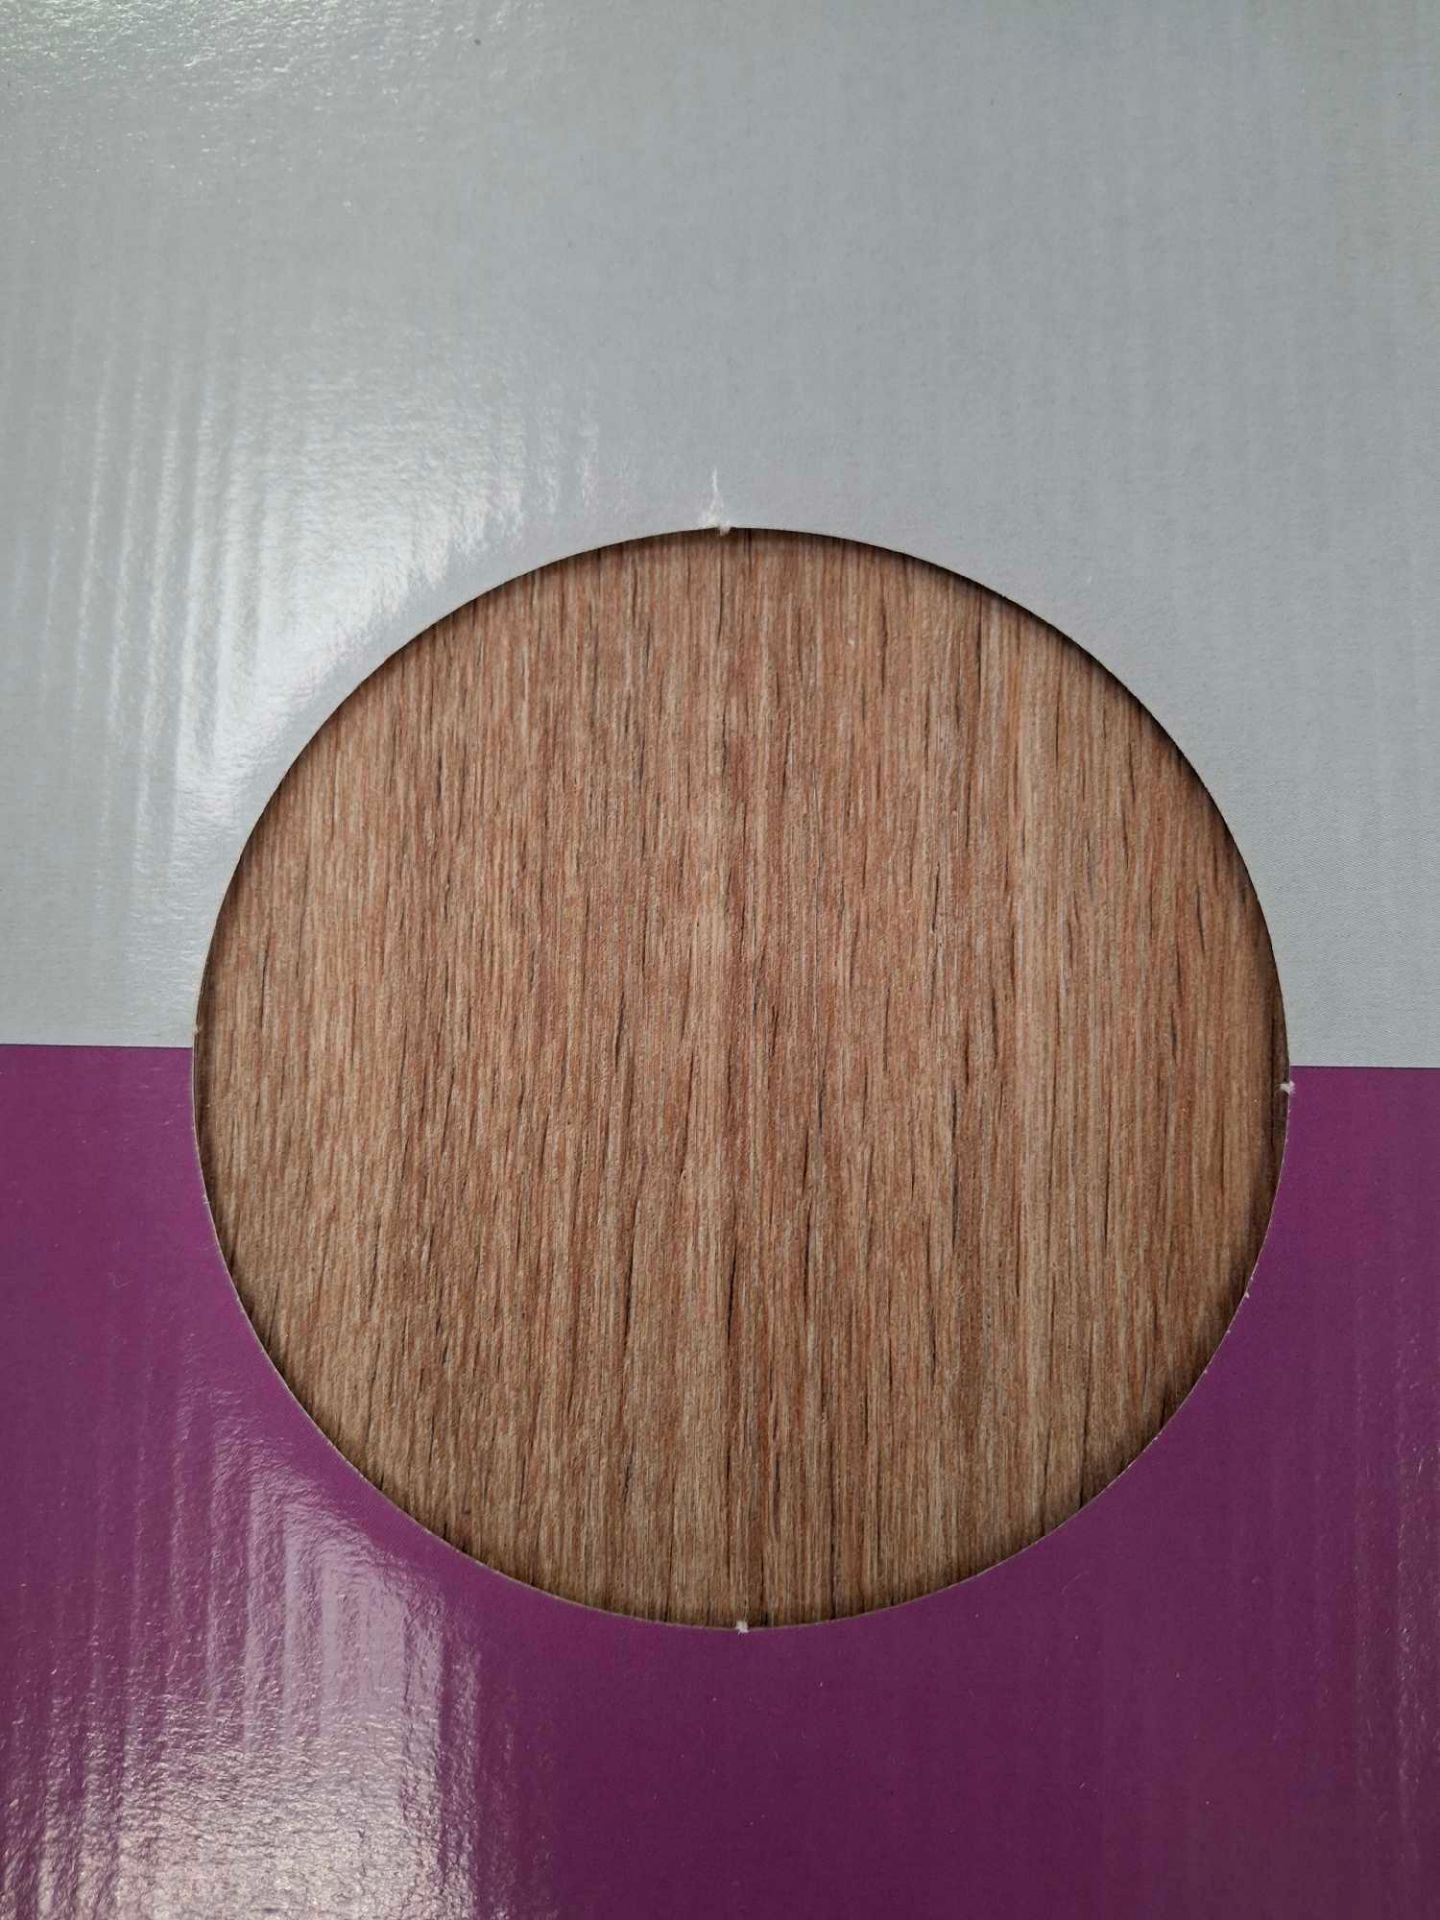 8 Packs Of Wood Flooring Casablanca Oak 1316mm x 191mm x 4.5mm Per Plank 7 Planks Per Pack Covers - Image 2 of 5